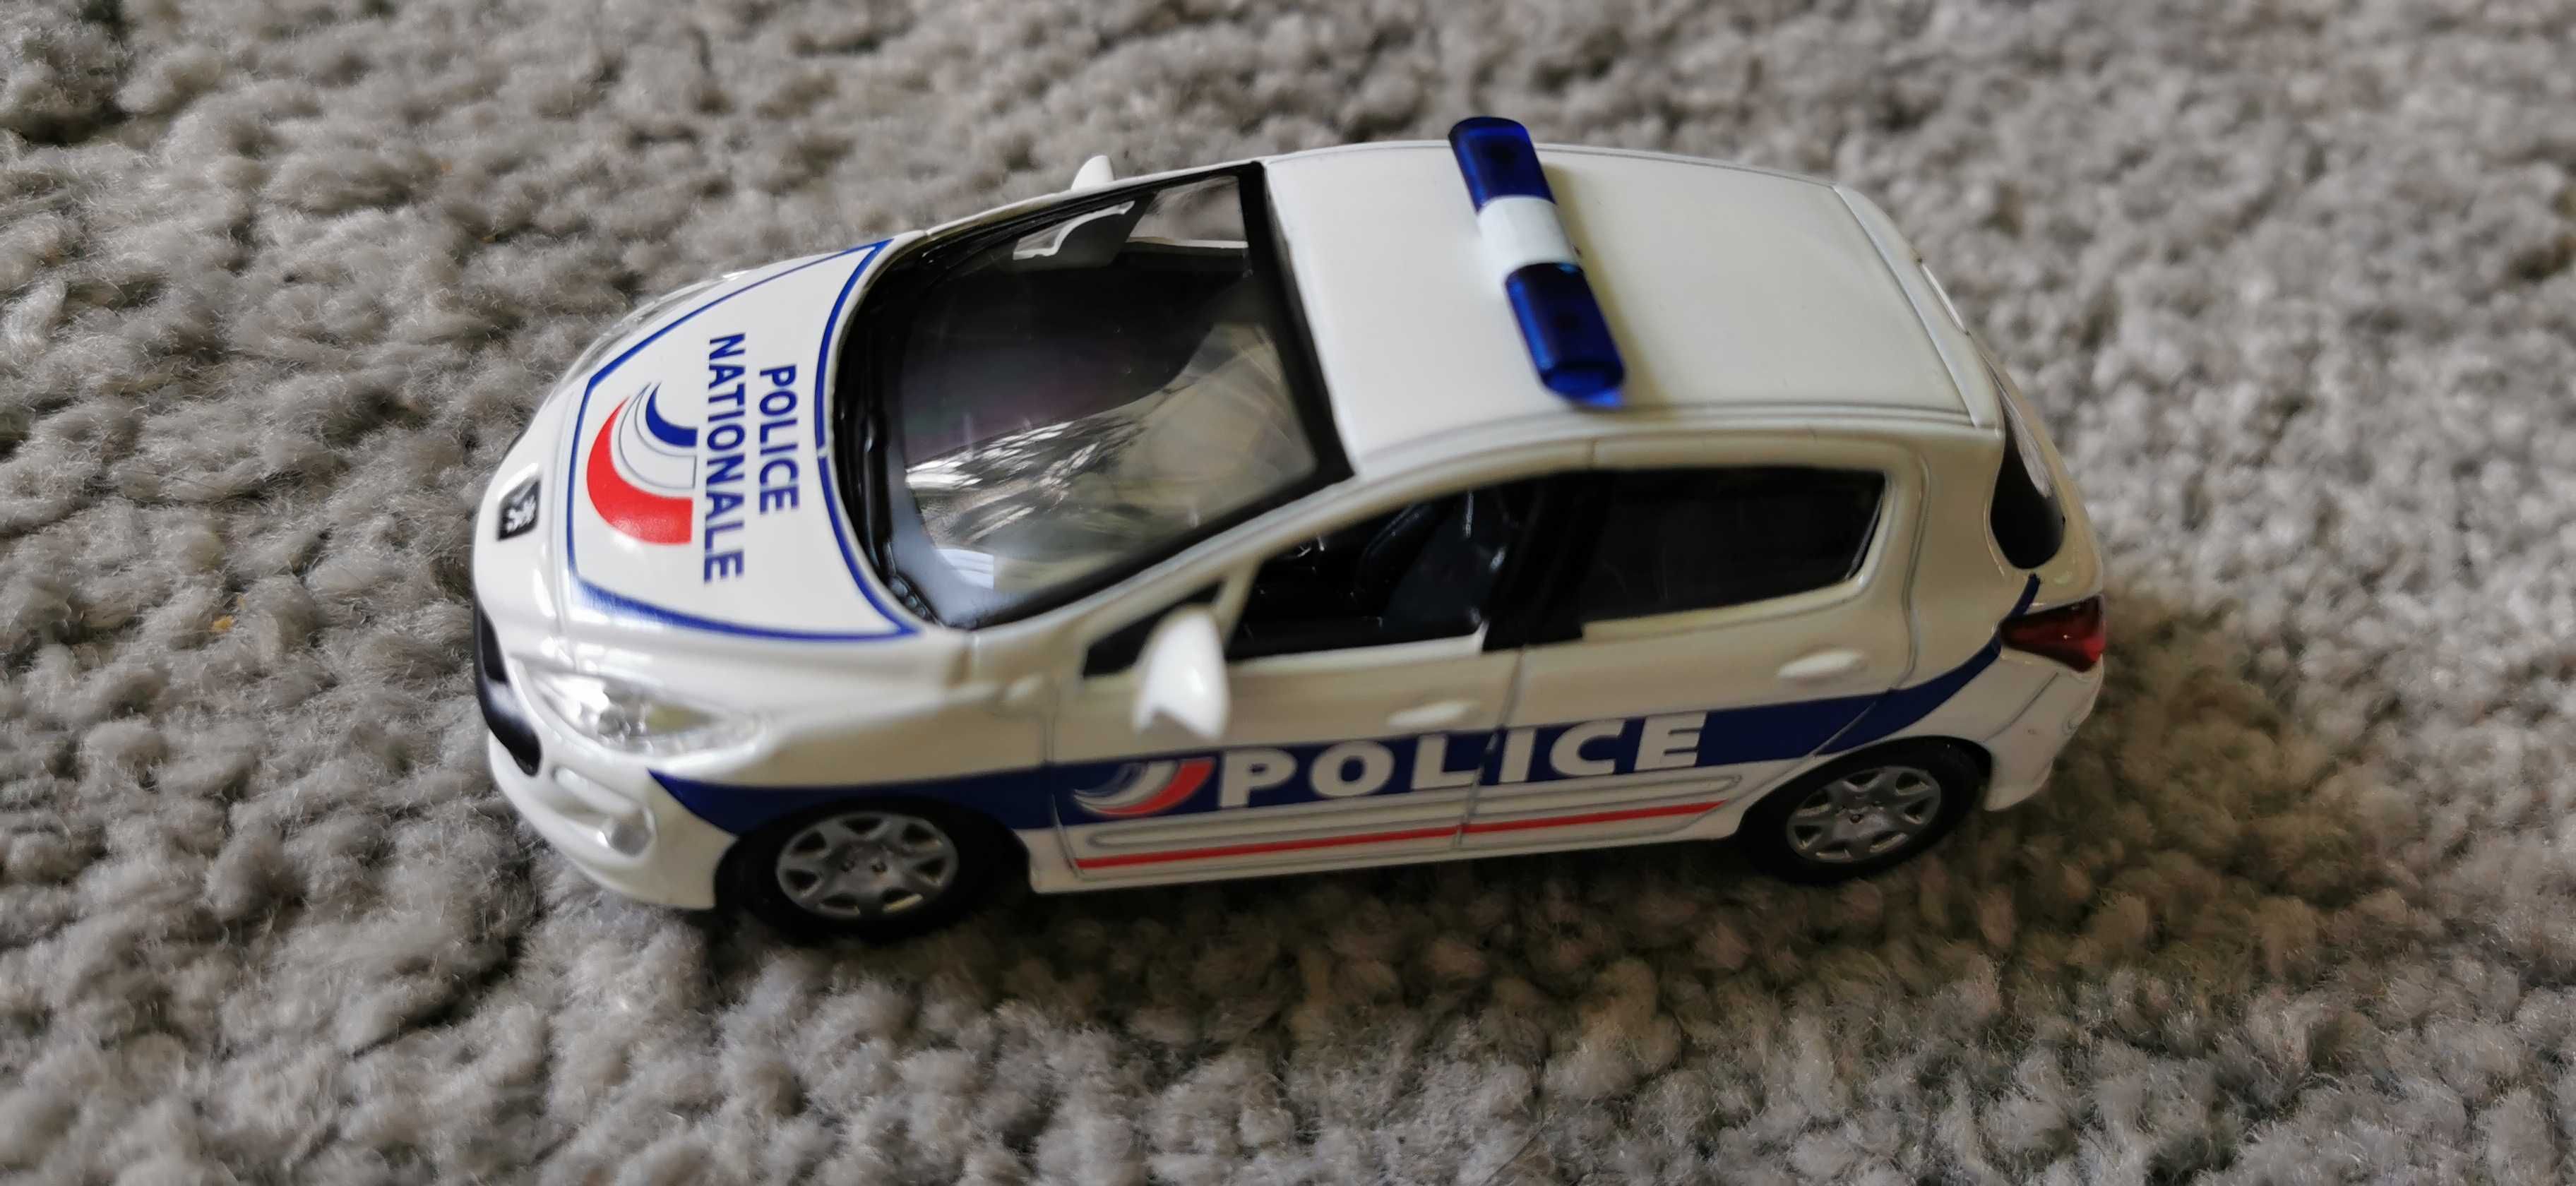 Peugeot 308 Police, model 1:43